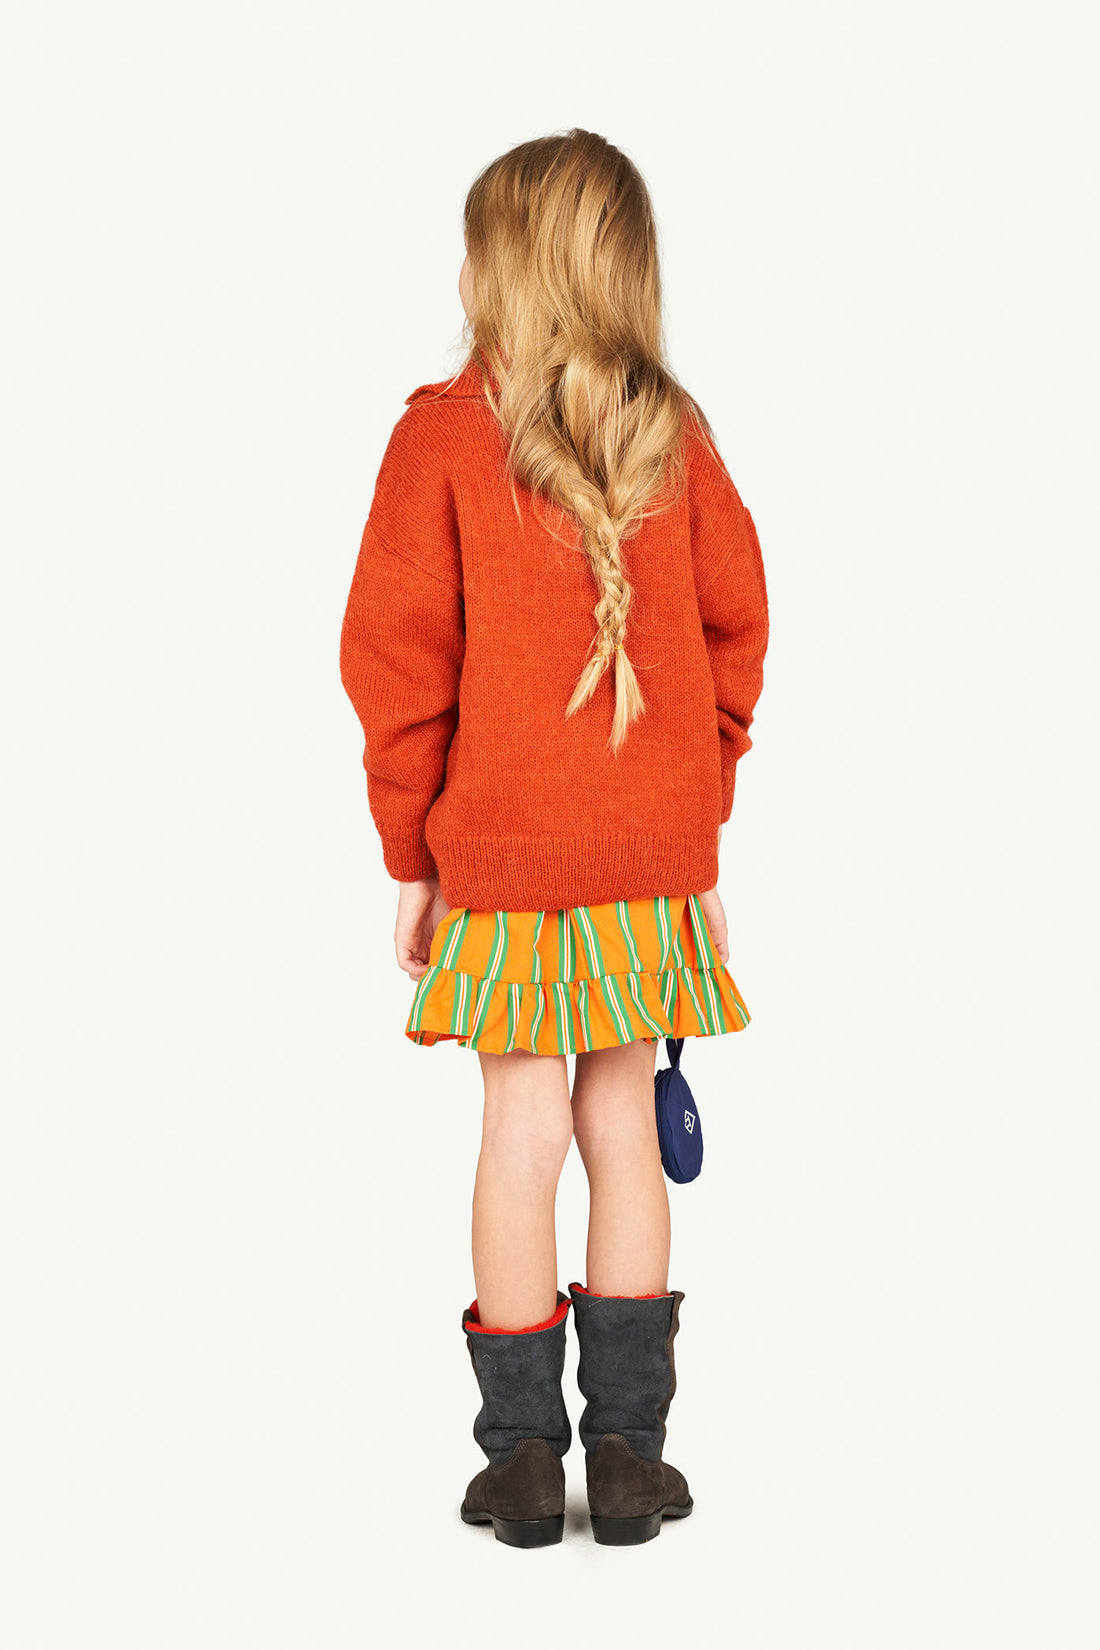 The animals observatory - Raven kids sweater - Deep orange logos